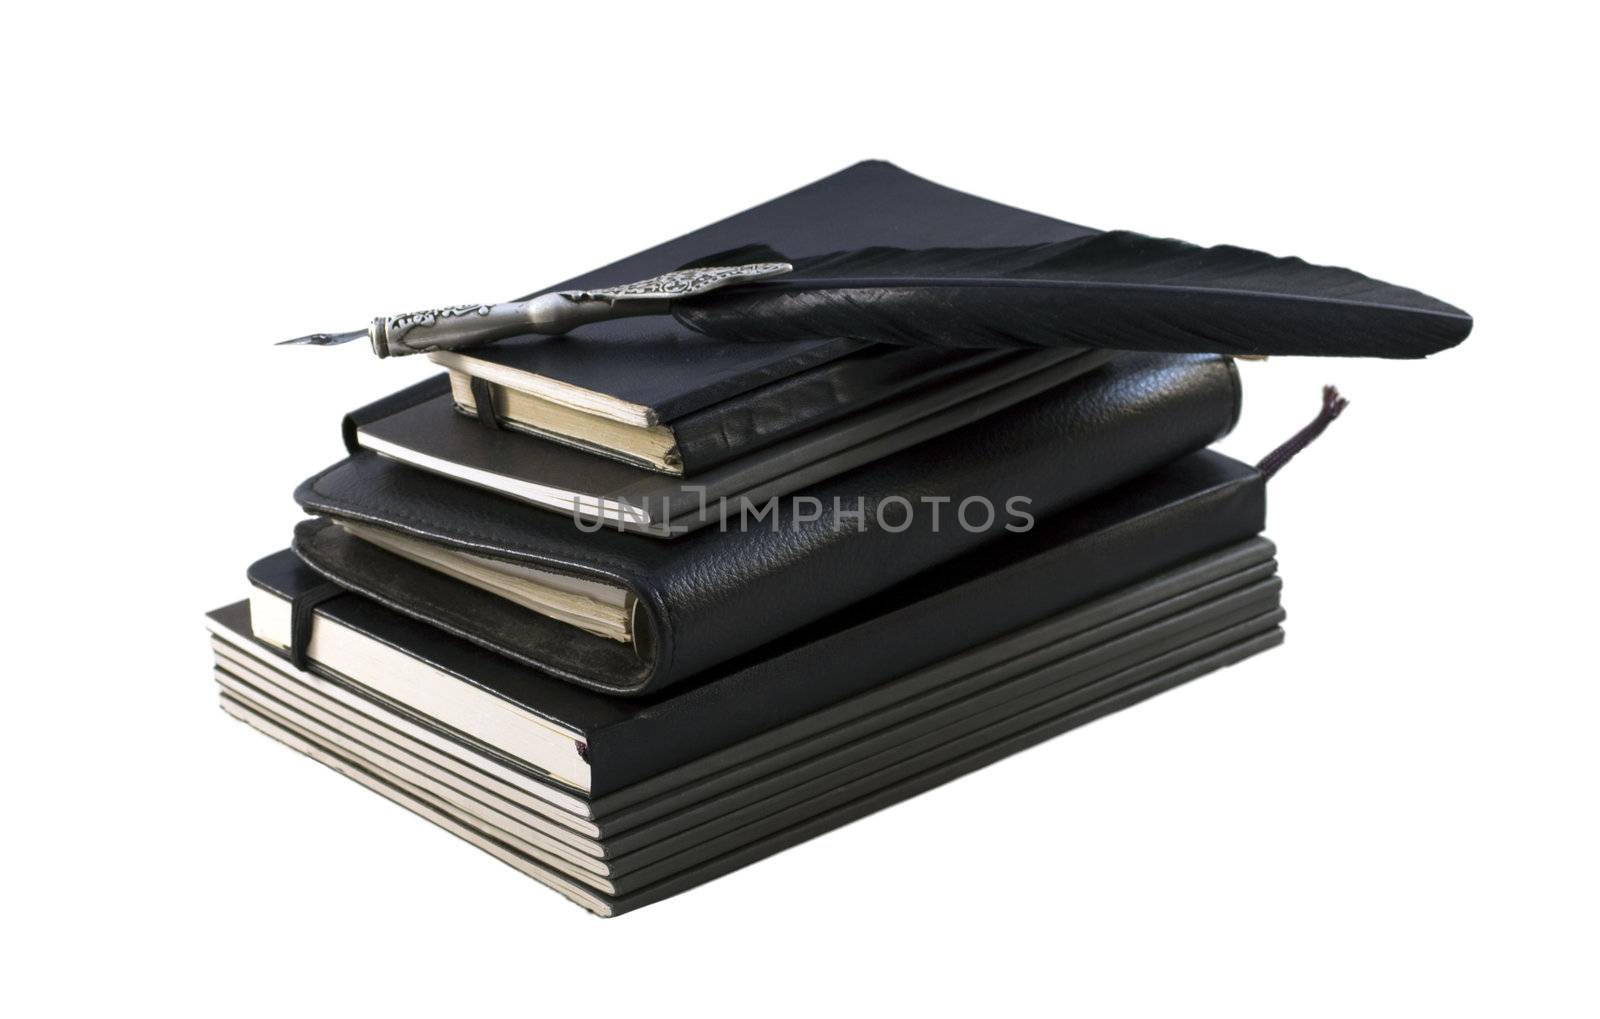 Notebooks by Koufax73